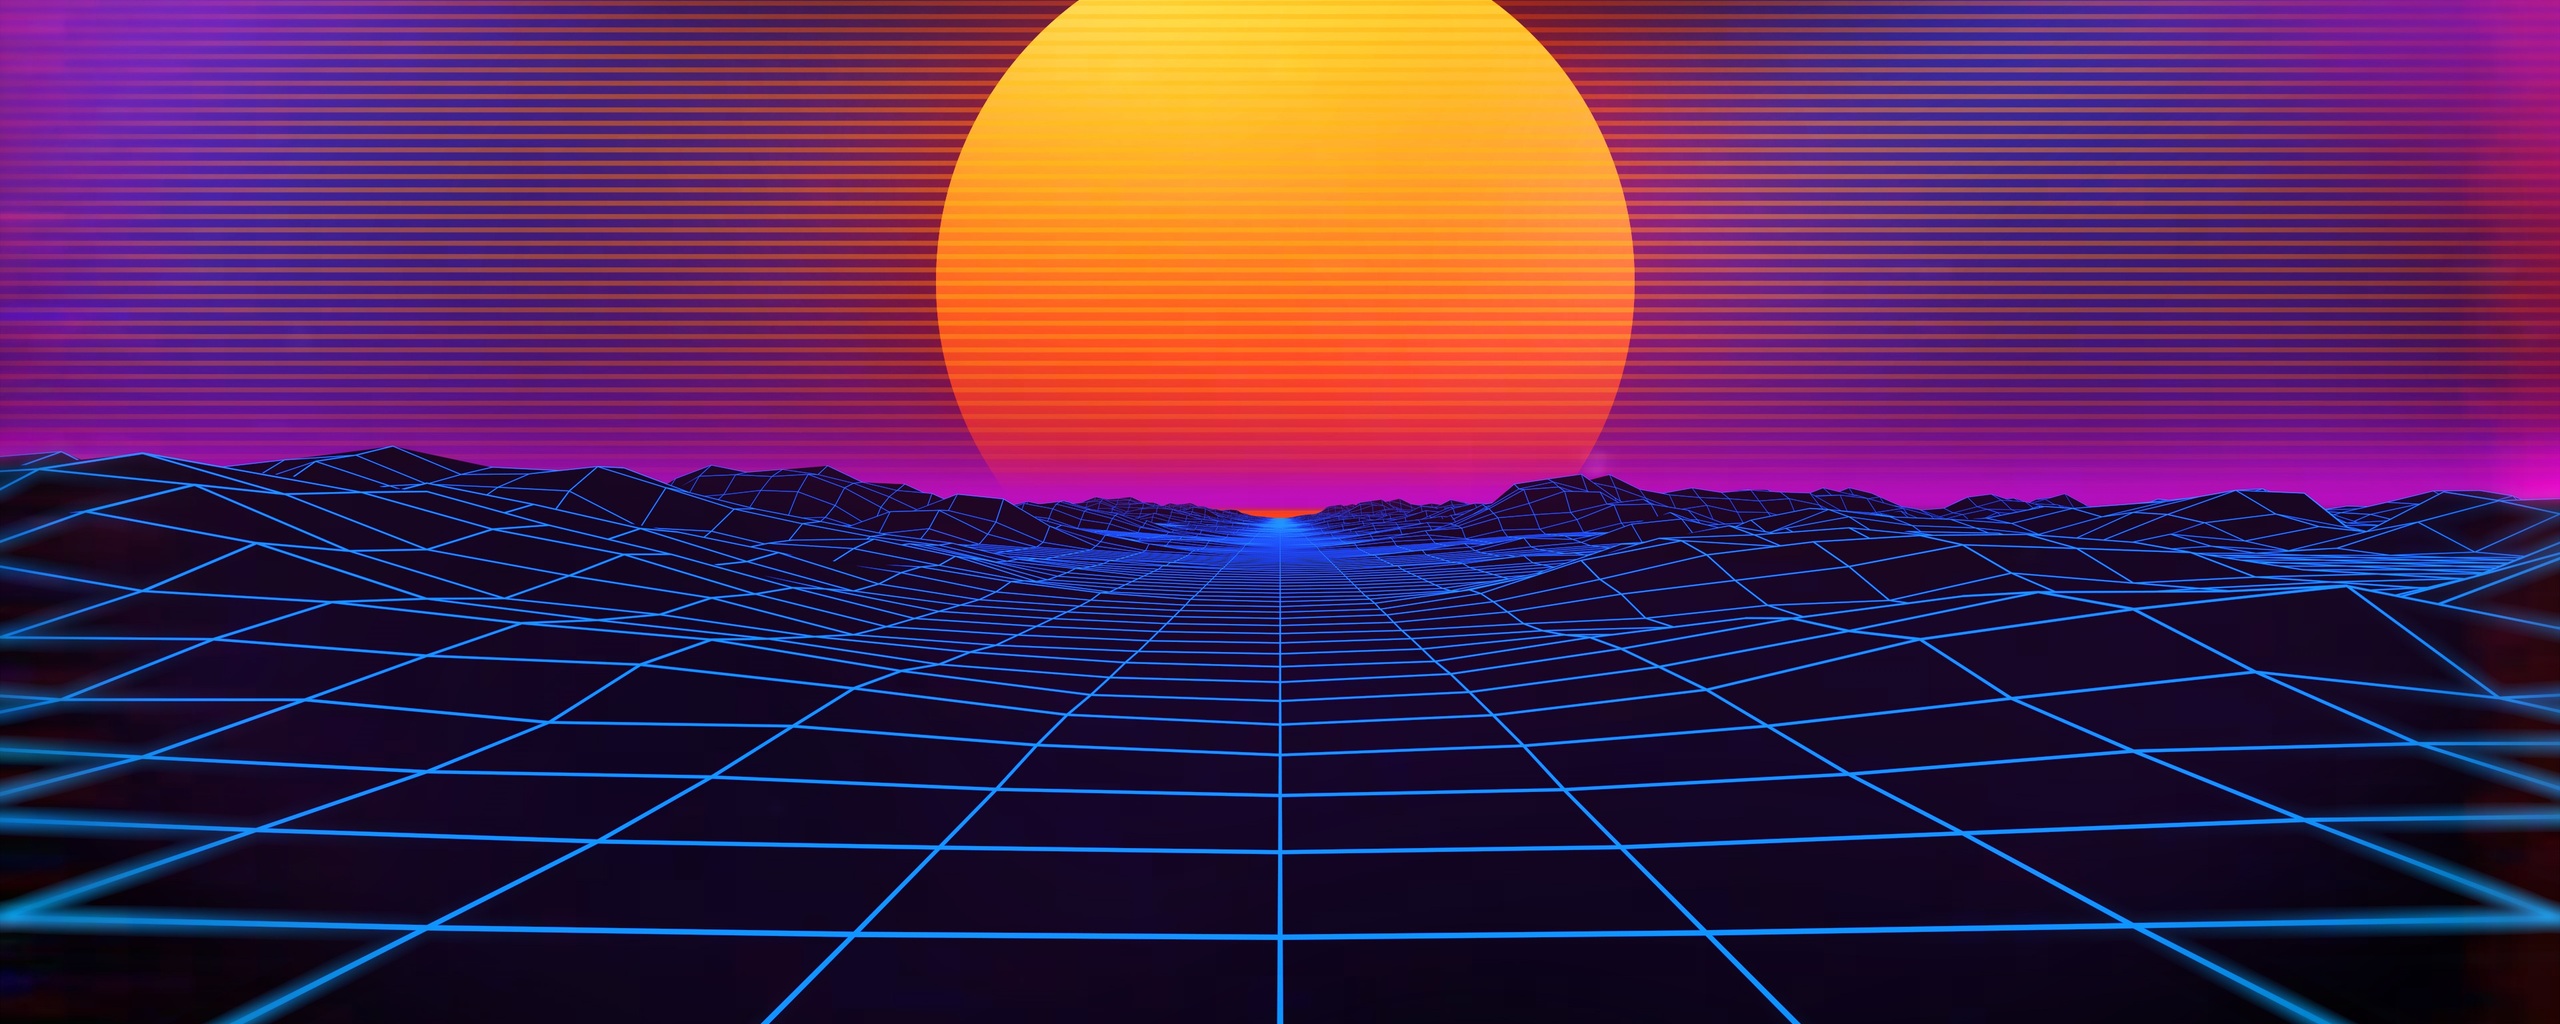 cyberpunk-sunset-grid-mountains-sun-dark-design-5t.jpg